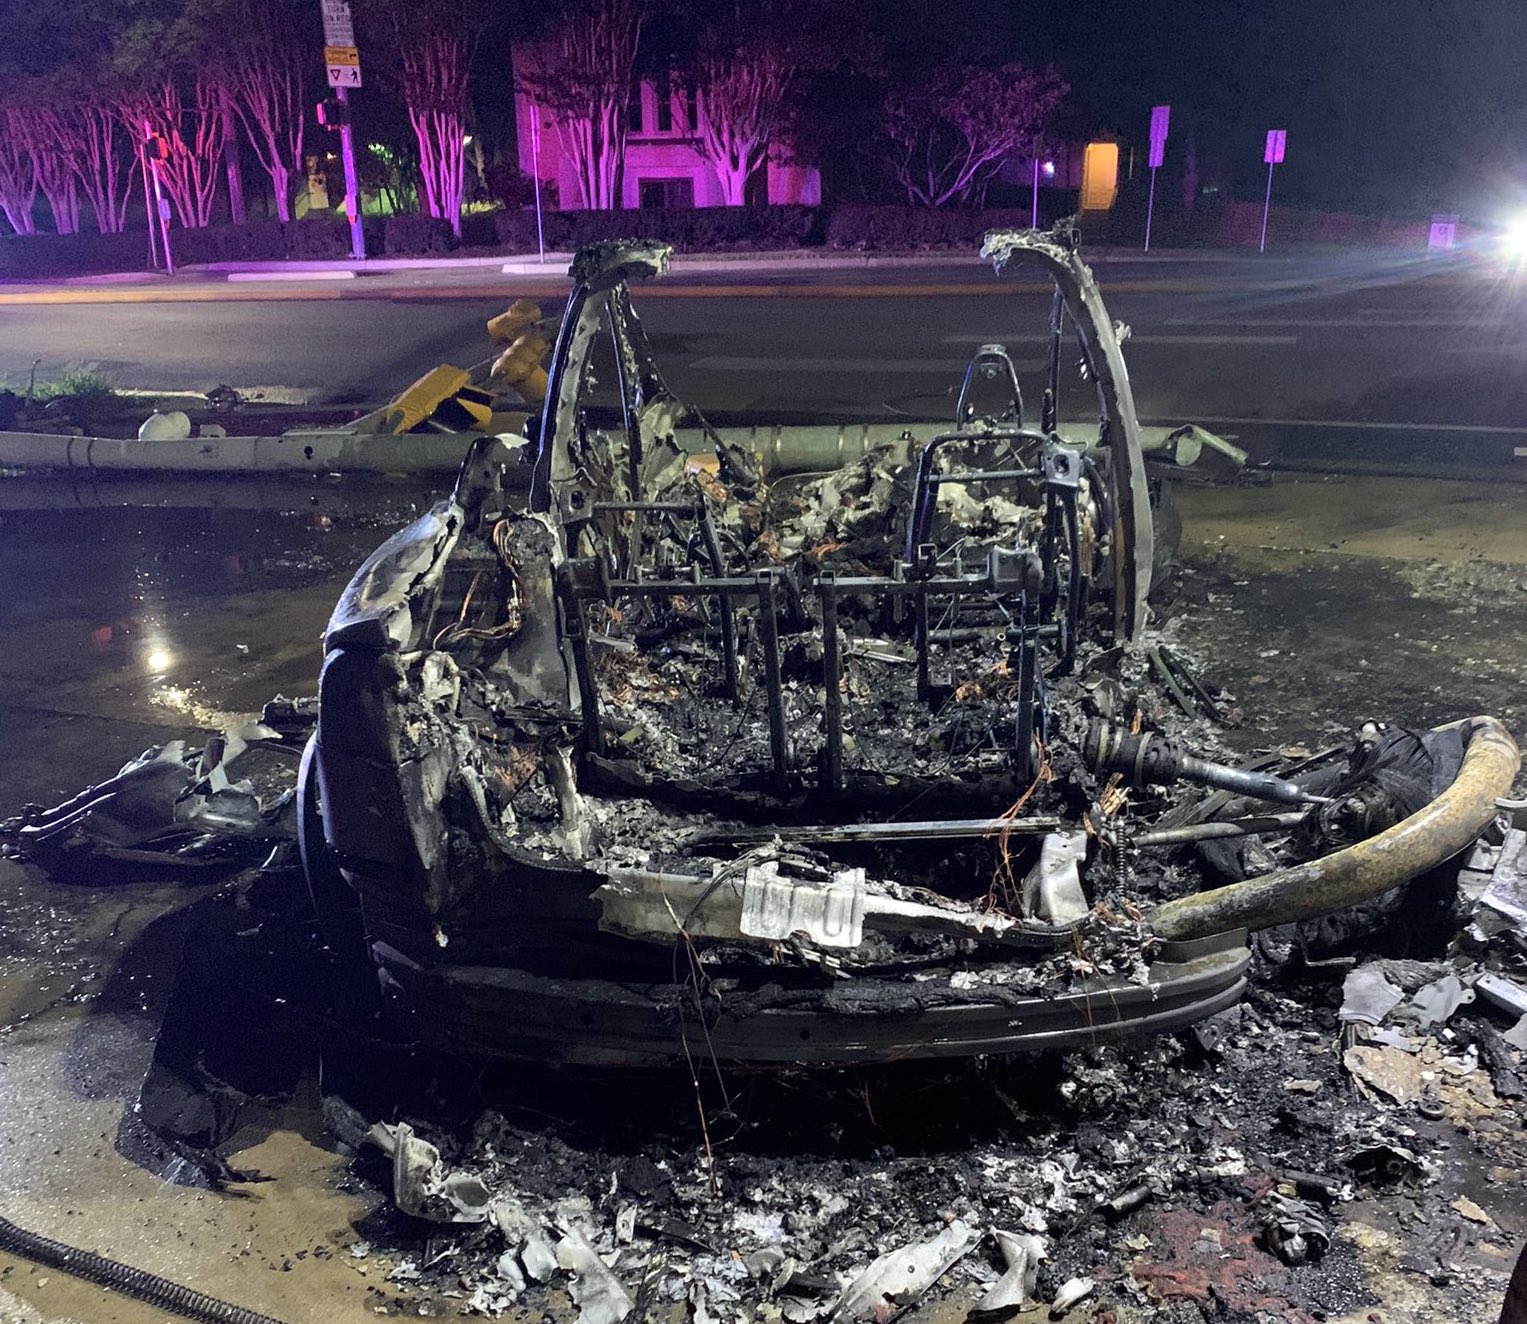 Tesla fire aftermath